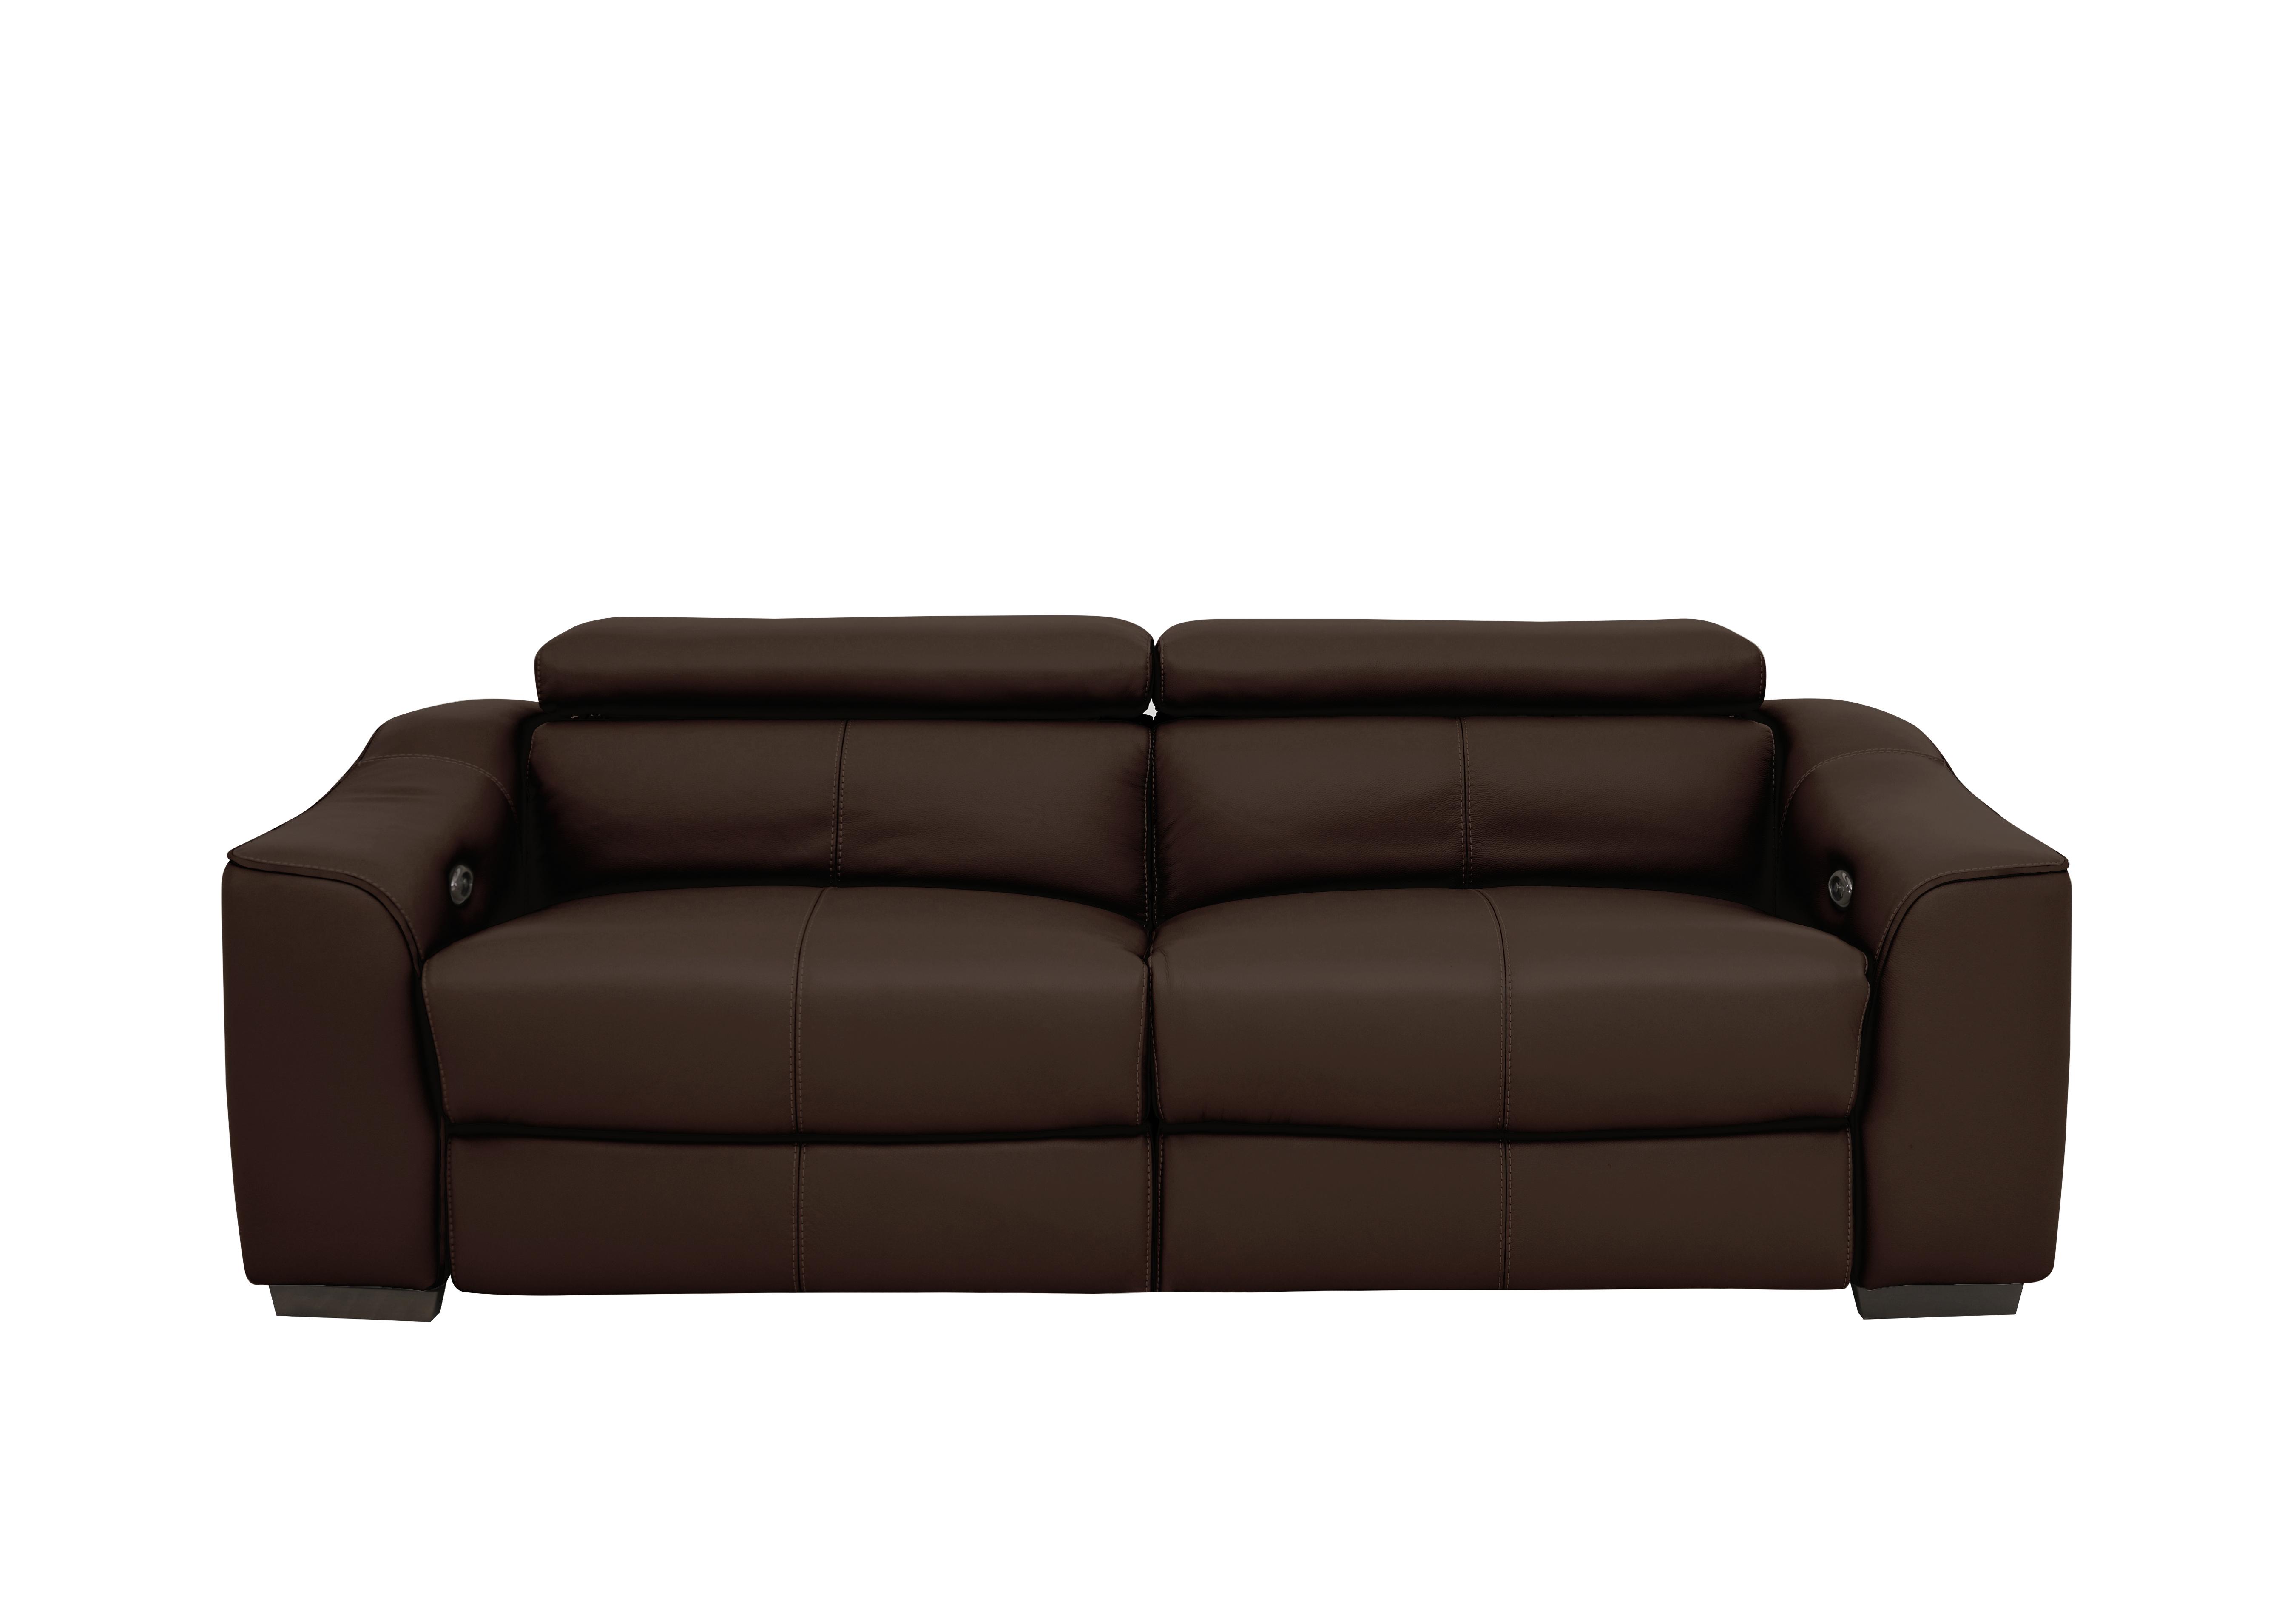 Elixir 3 Seater Leather Sofa in Bv-1748 Dark Chocolate on Furniture Village